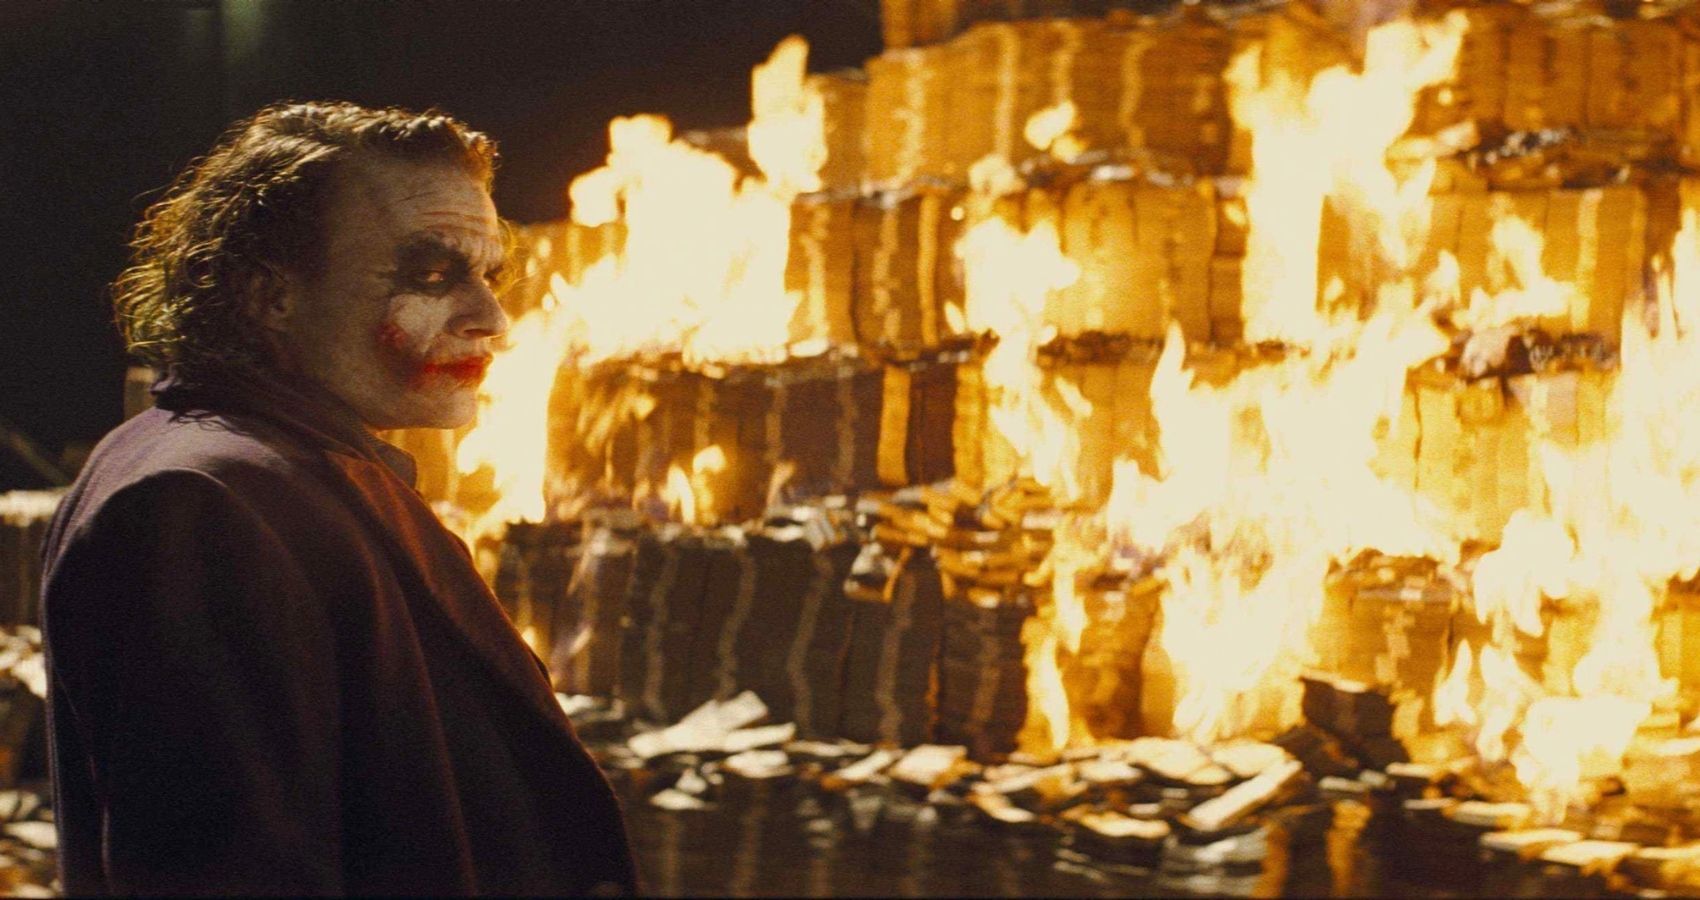 The Joker burning cash in The Dark Knight